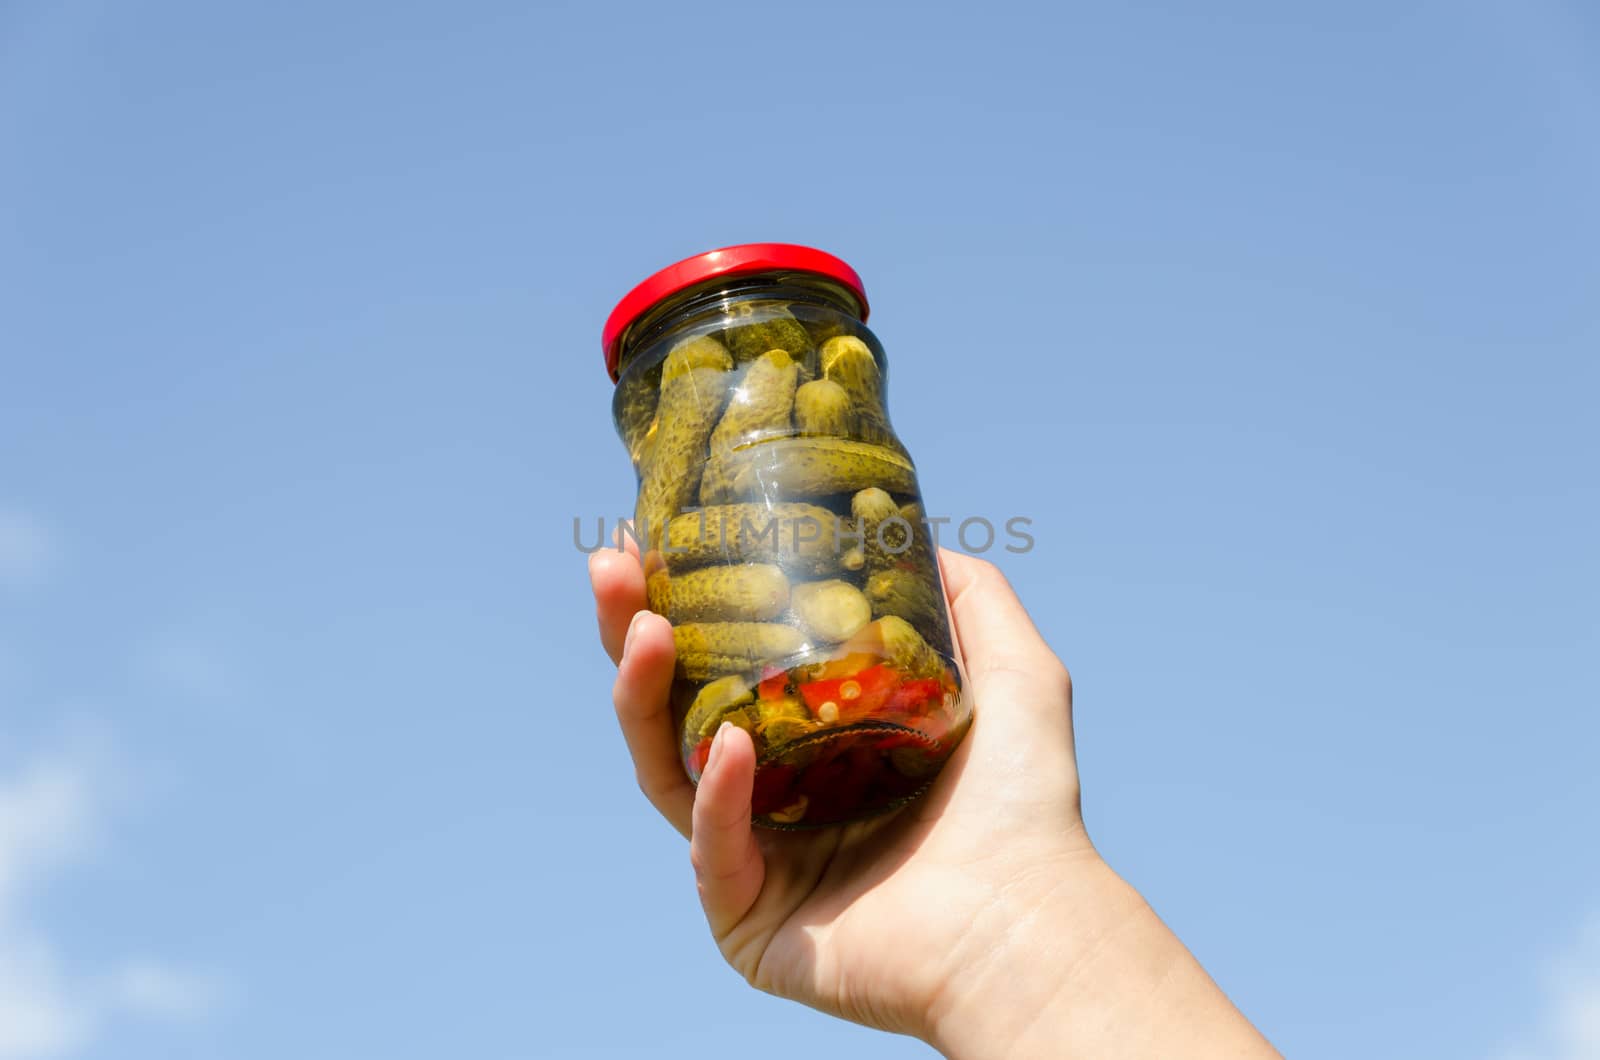 cucumber jar in female hand on blue sky background by sauletas